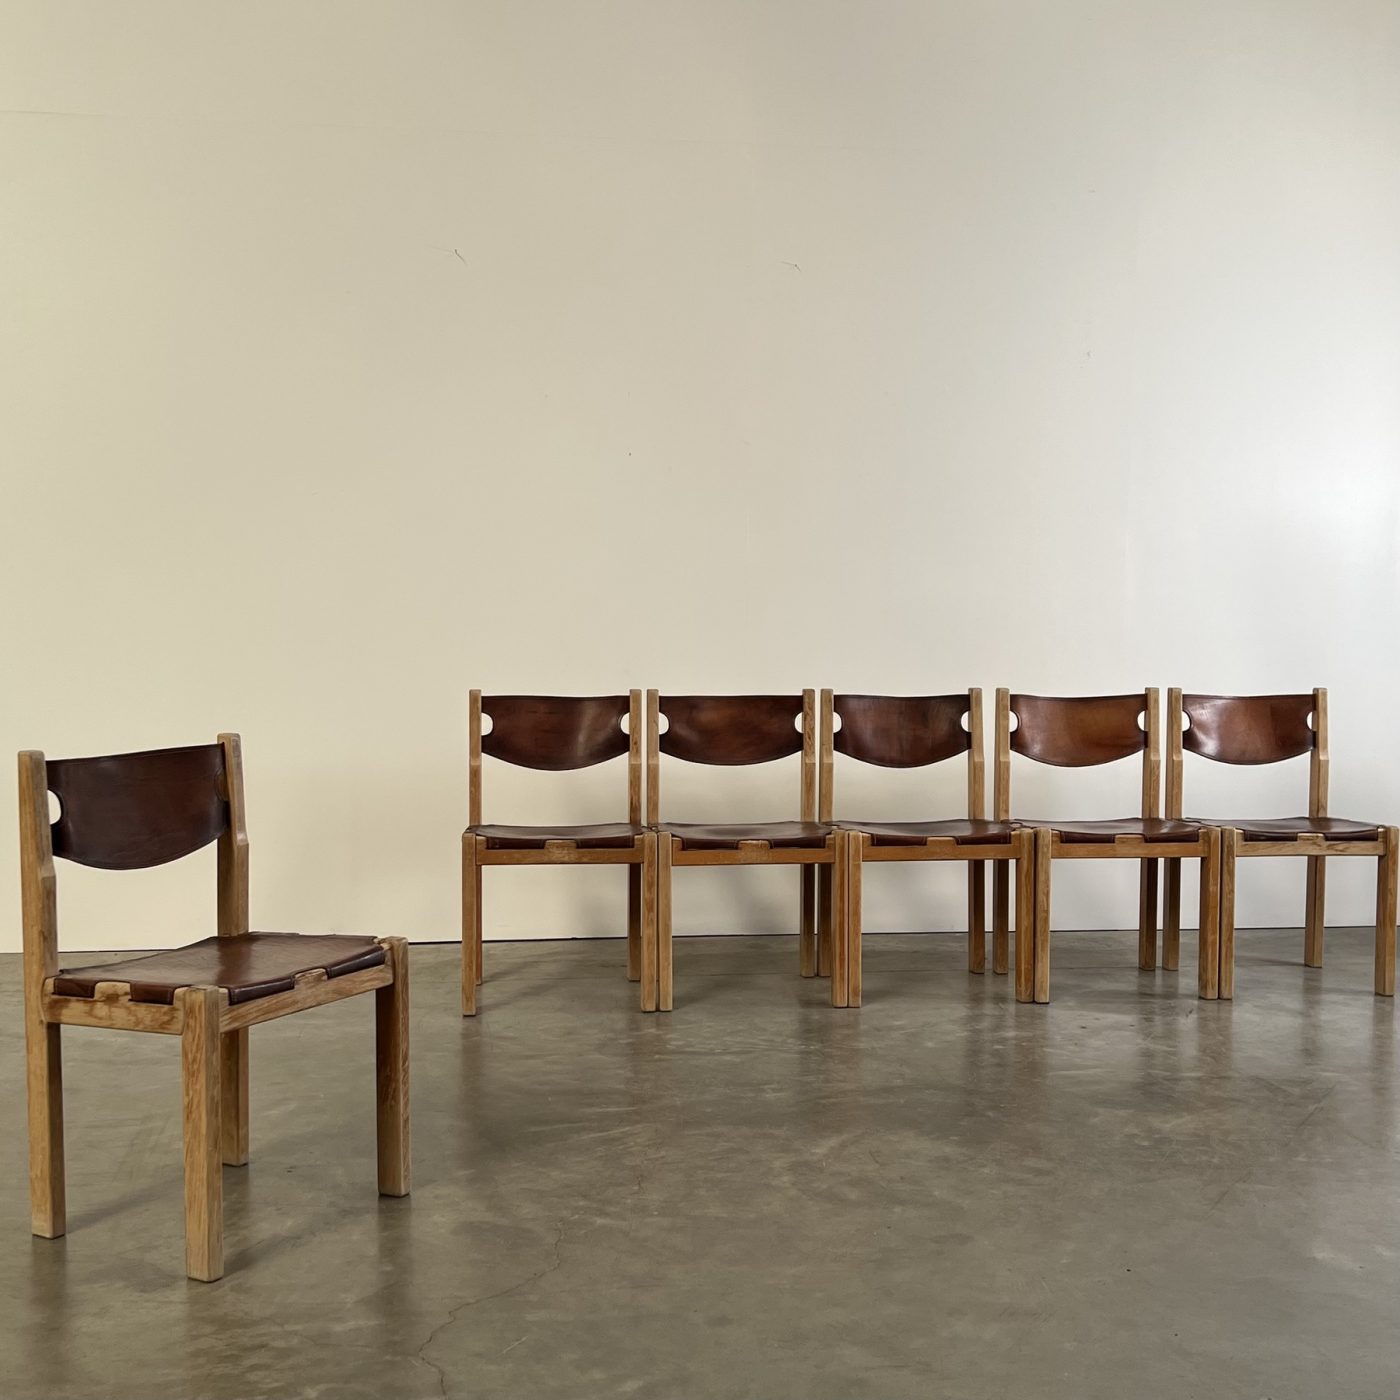 objet-vagabond-leather-chairs0013